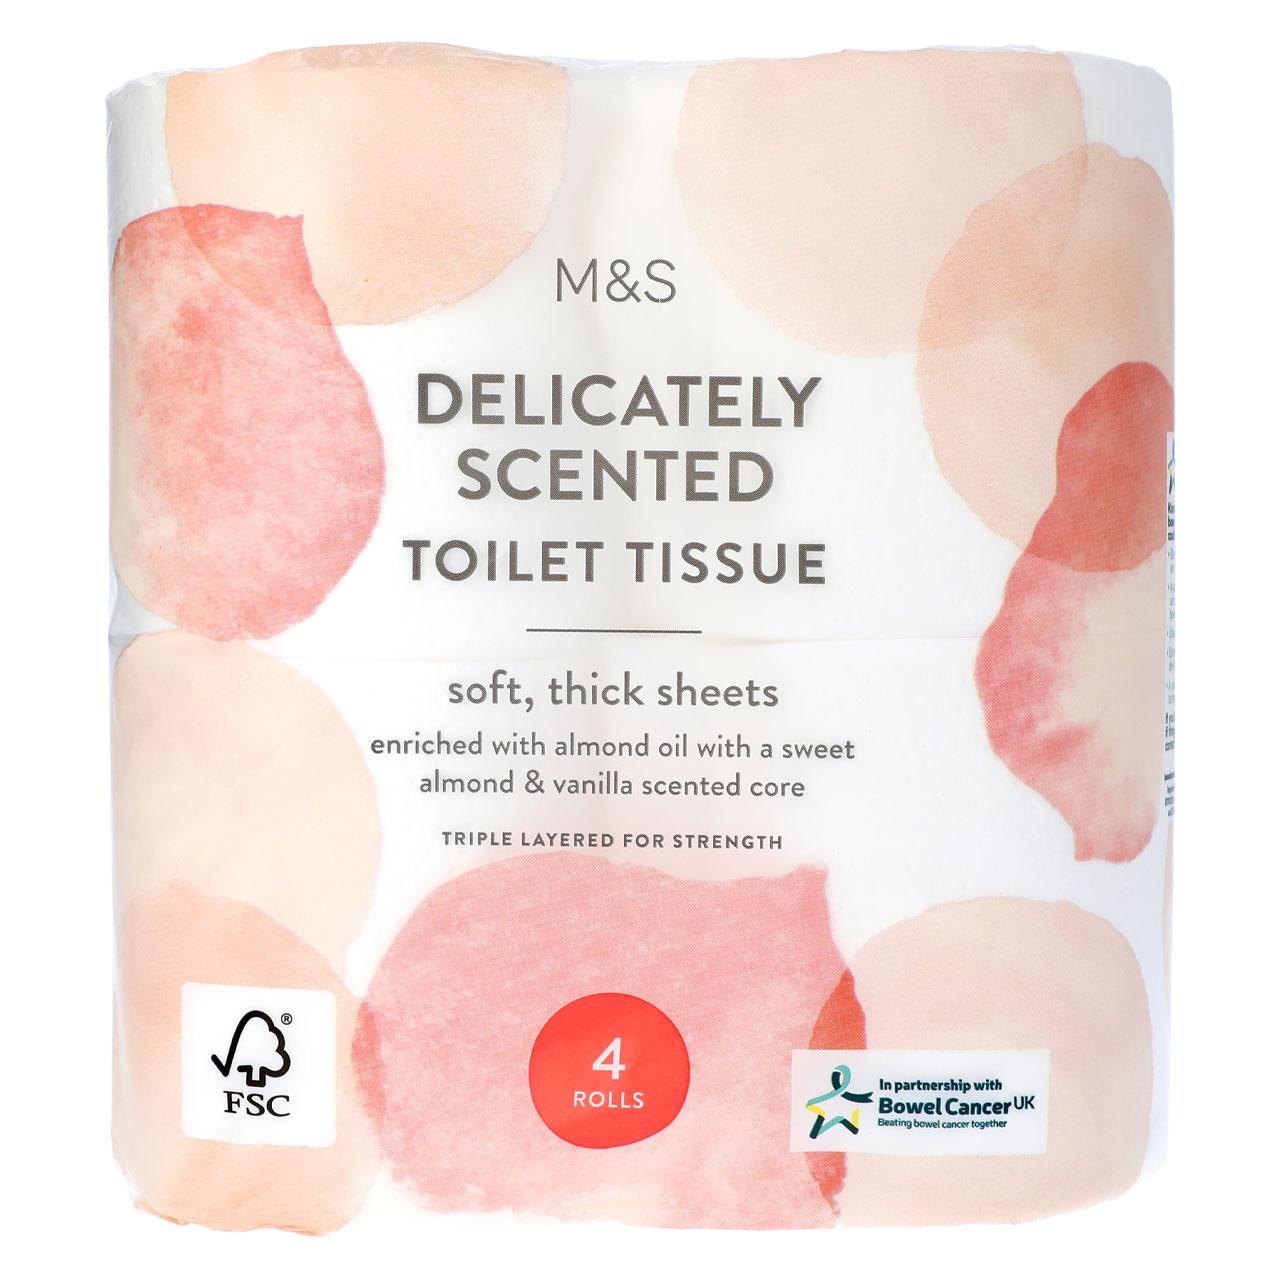 M&S Delicately Scented Toilet Tissue